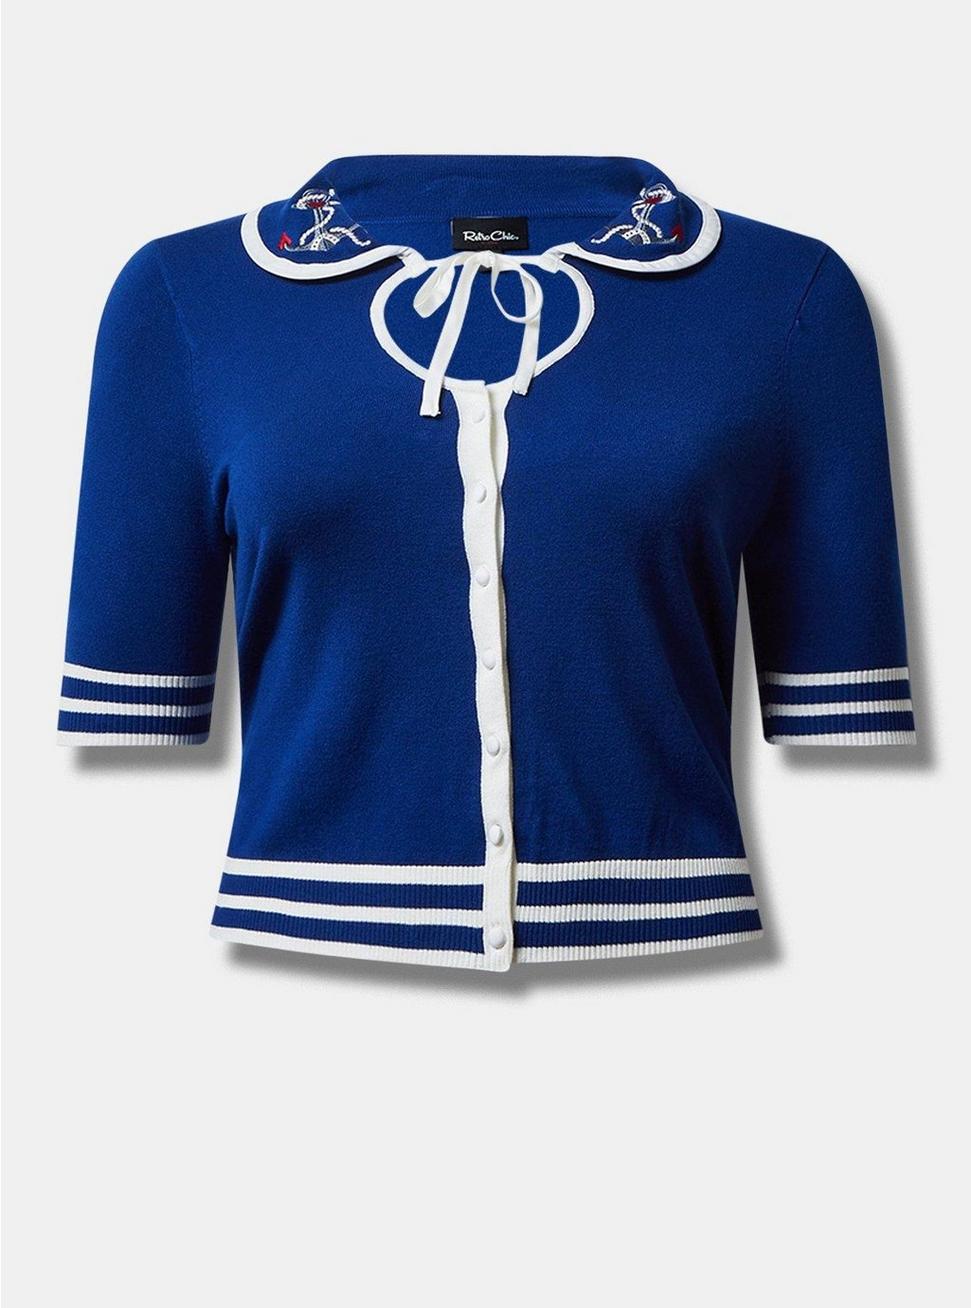 Retro Chic Cropped Cardigan Sweater, SODALITE BLUE, hi-res